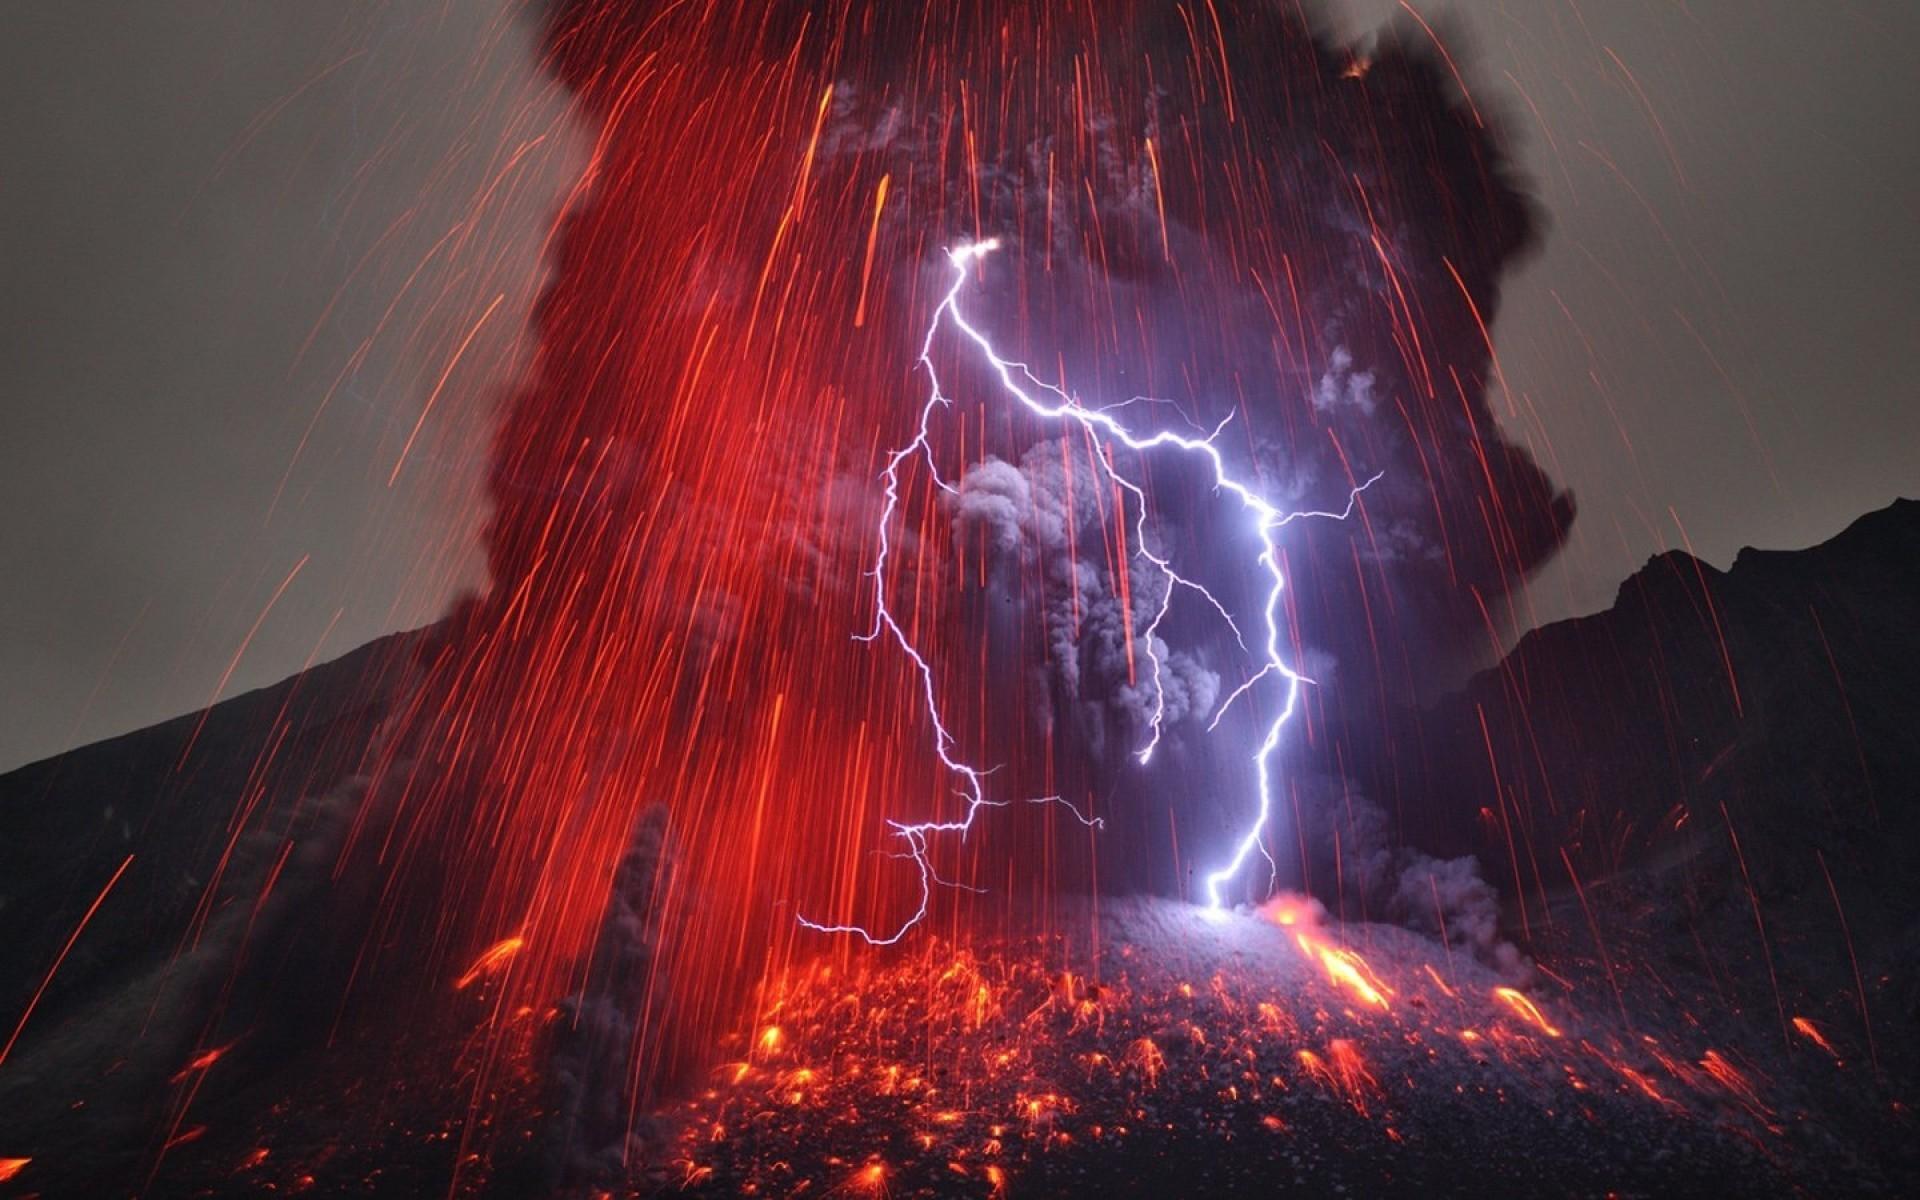 Download Volcano, Lightning Wallpapers for MacBook Pro